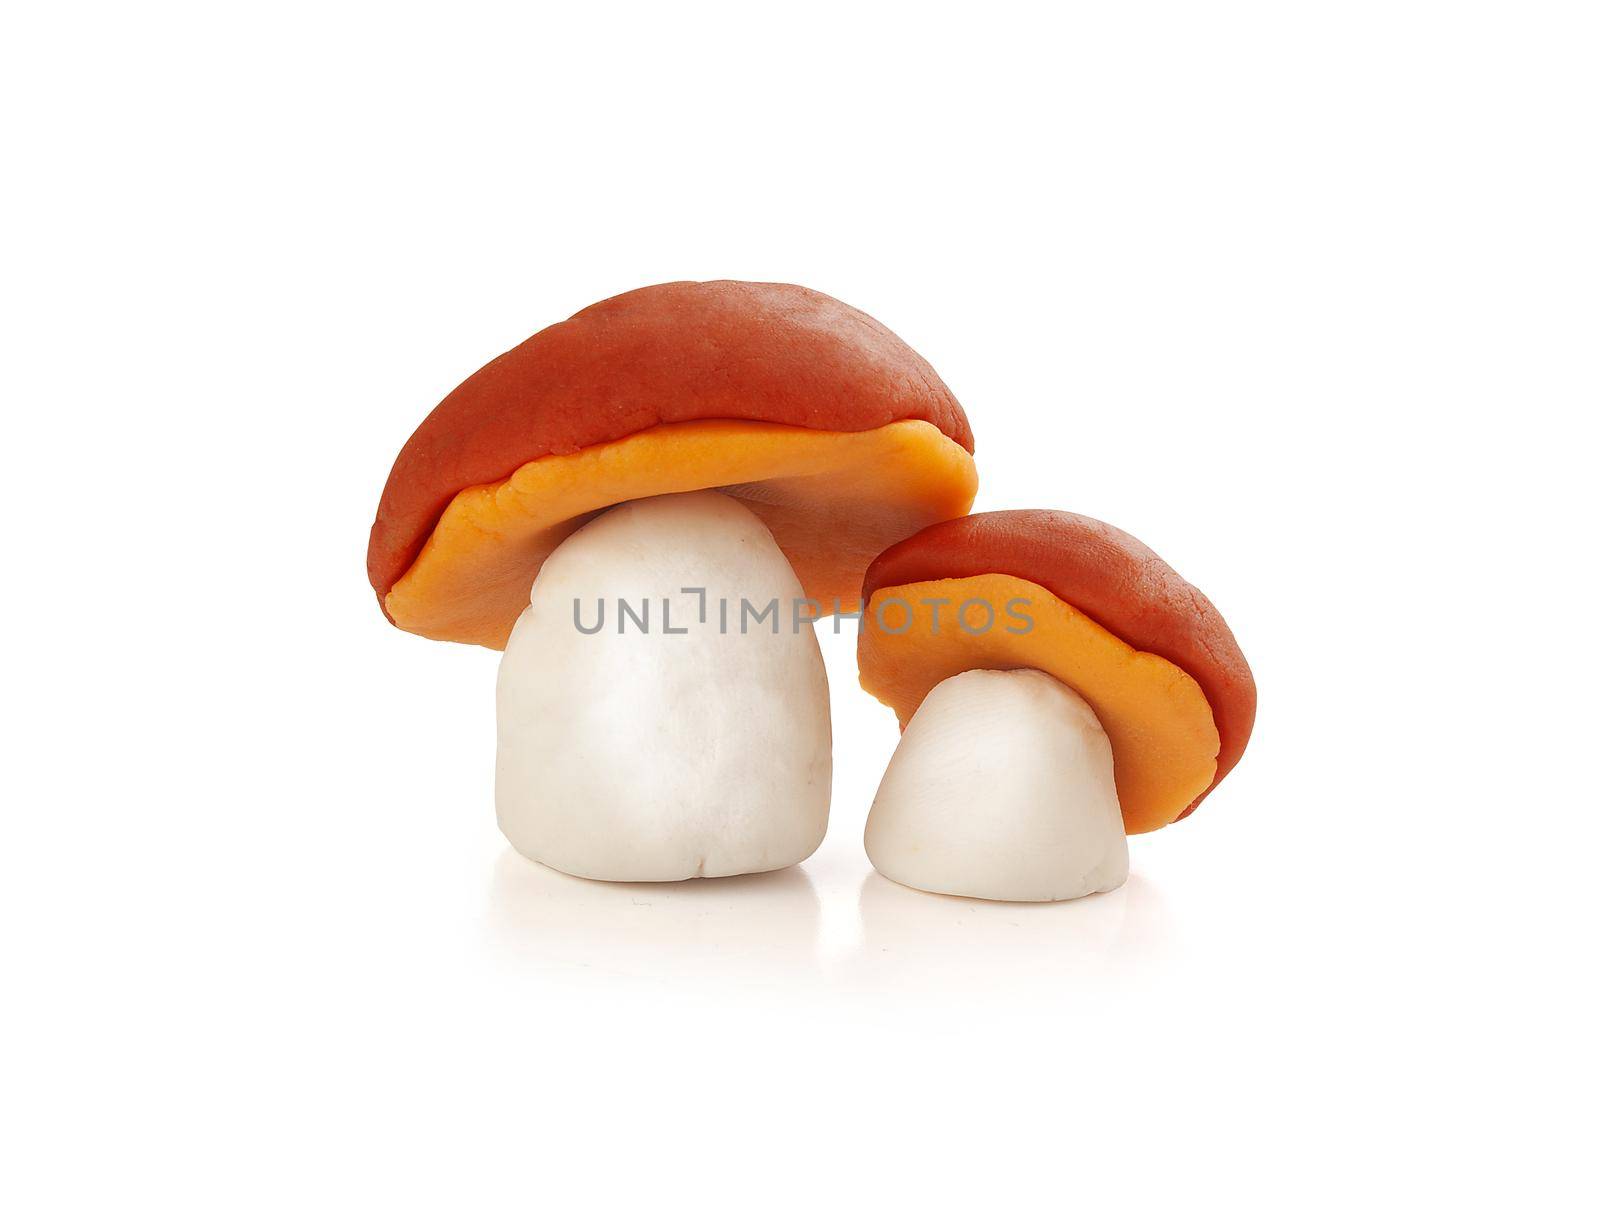 Isoalted plasticine mushrooms by Angorius